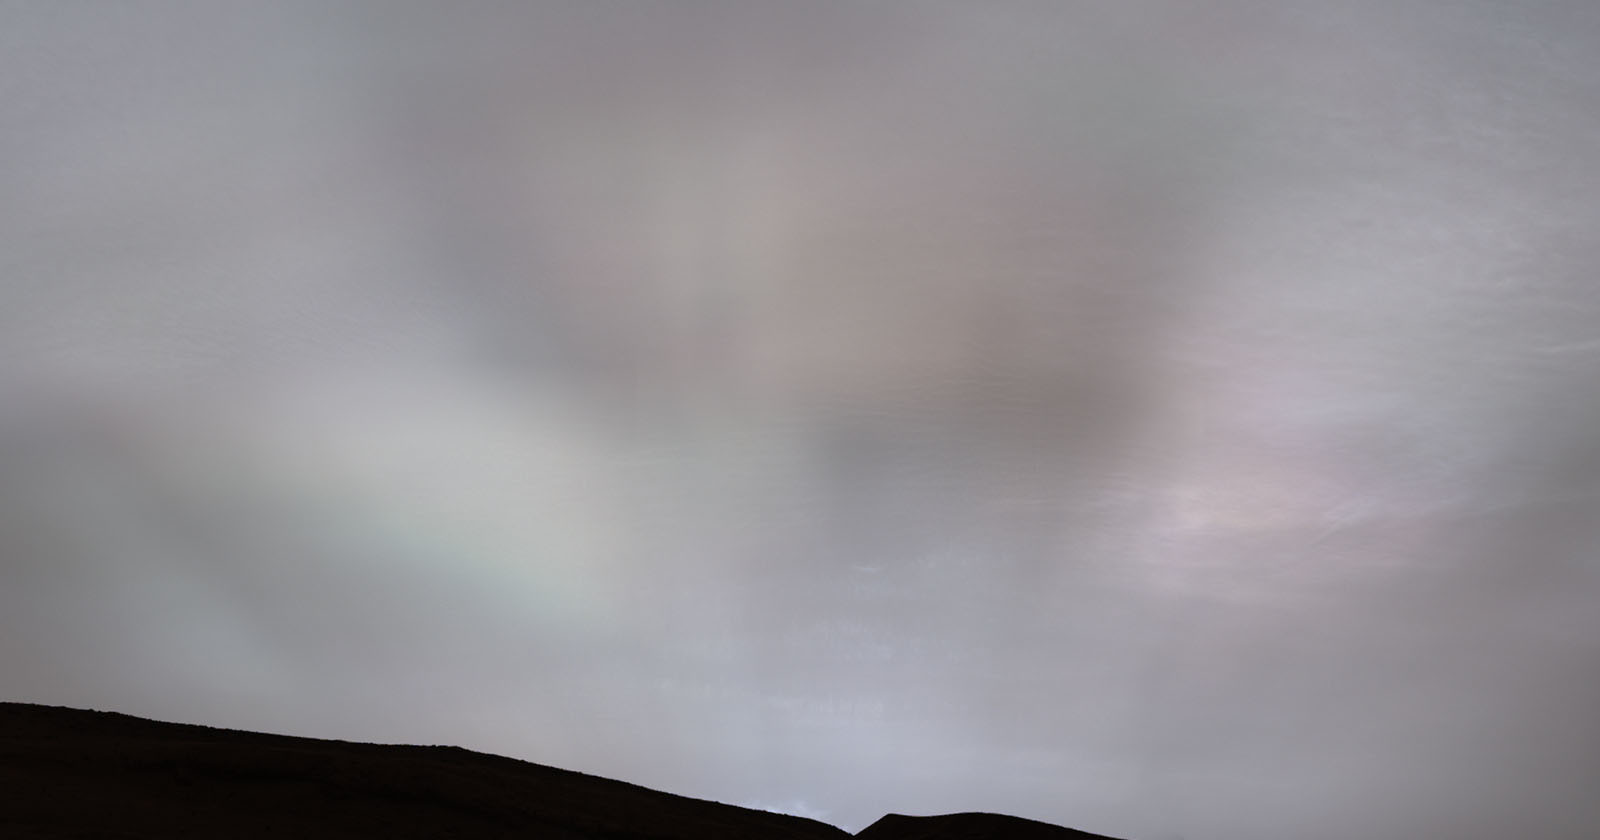  nasa curiosity rover captures first sun rays 